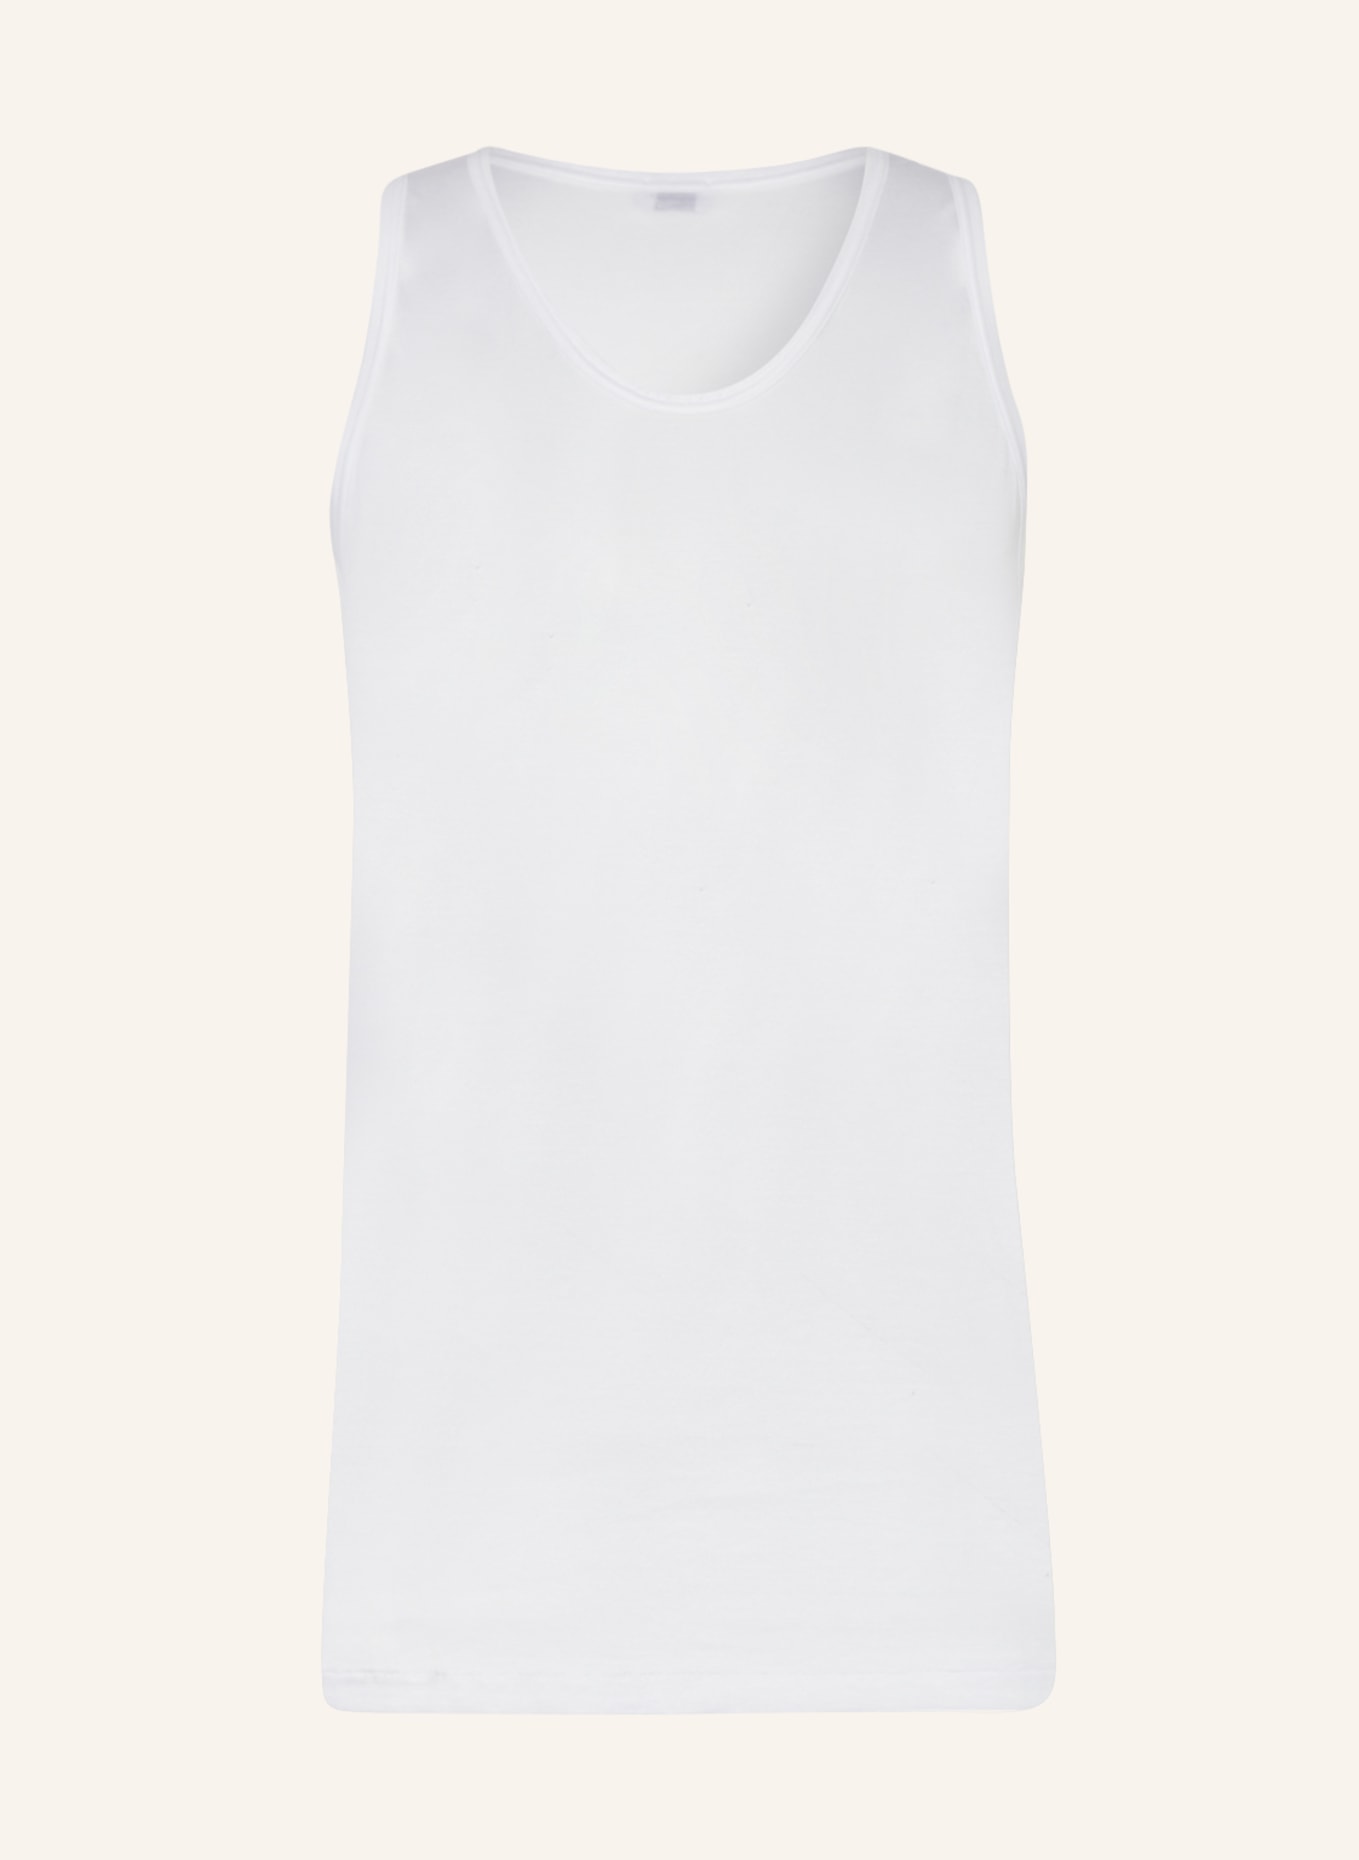 zimmerli Unterhemd ROYAL CLASSIC, Farbe: WEISS (Bild 1)